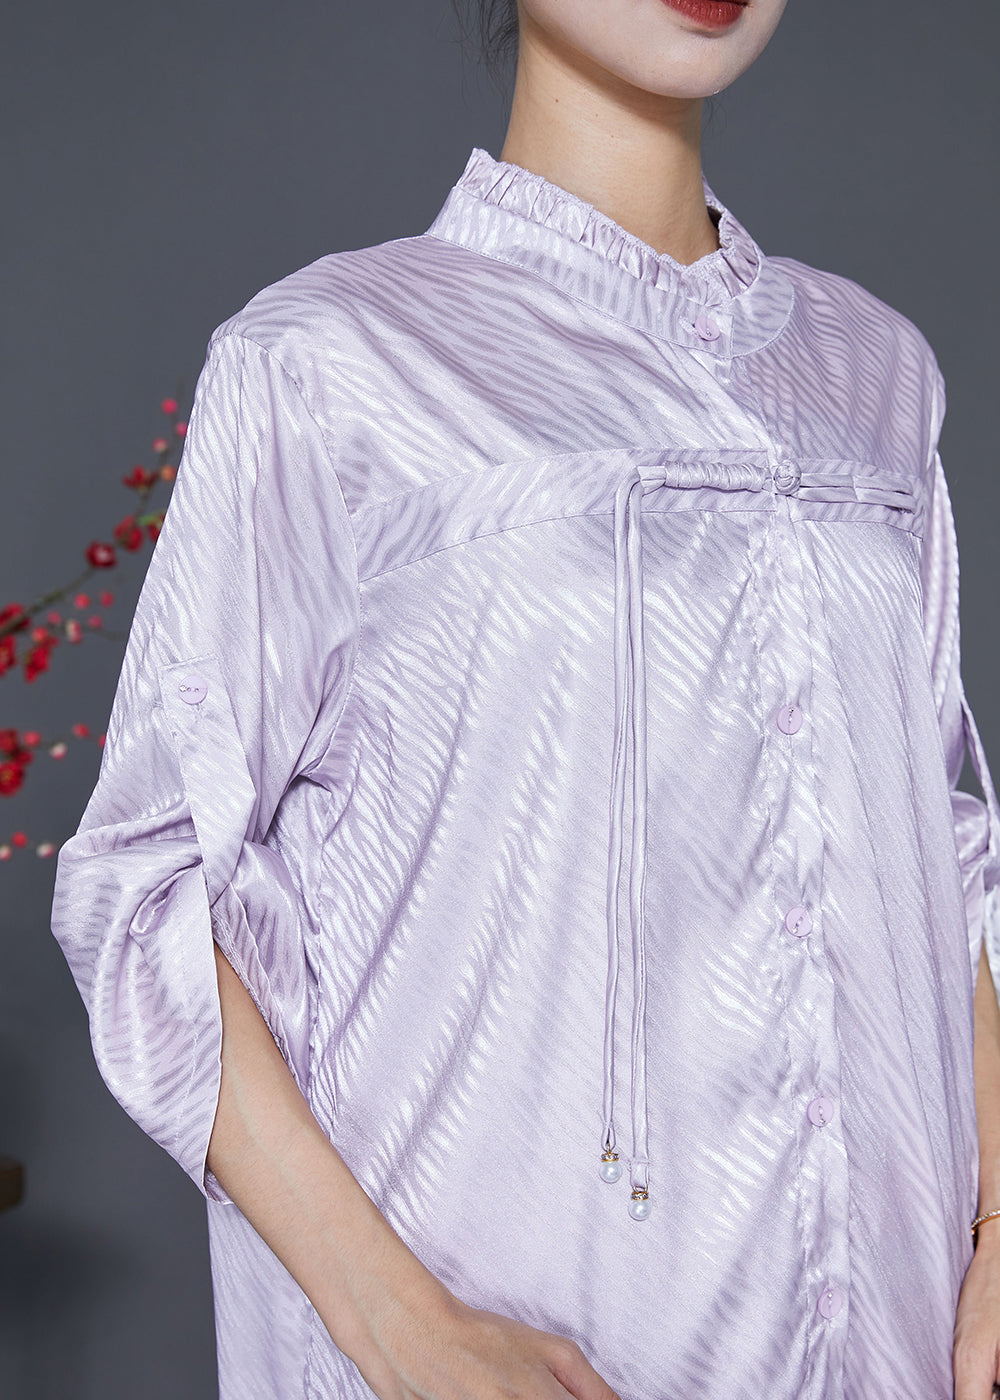 Elegant Light Purple Ruffled Tasseled Silk Two Pieces Set Fall